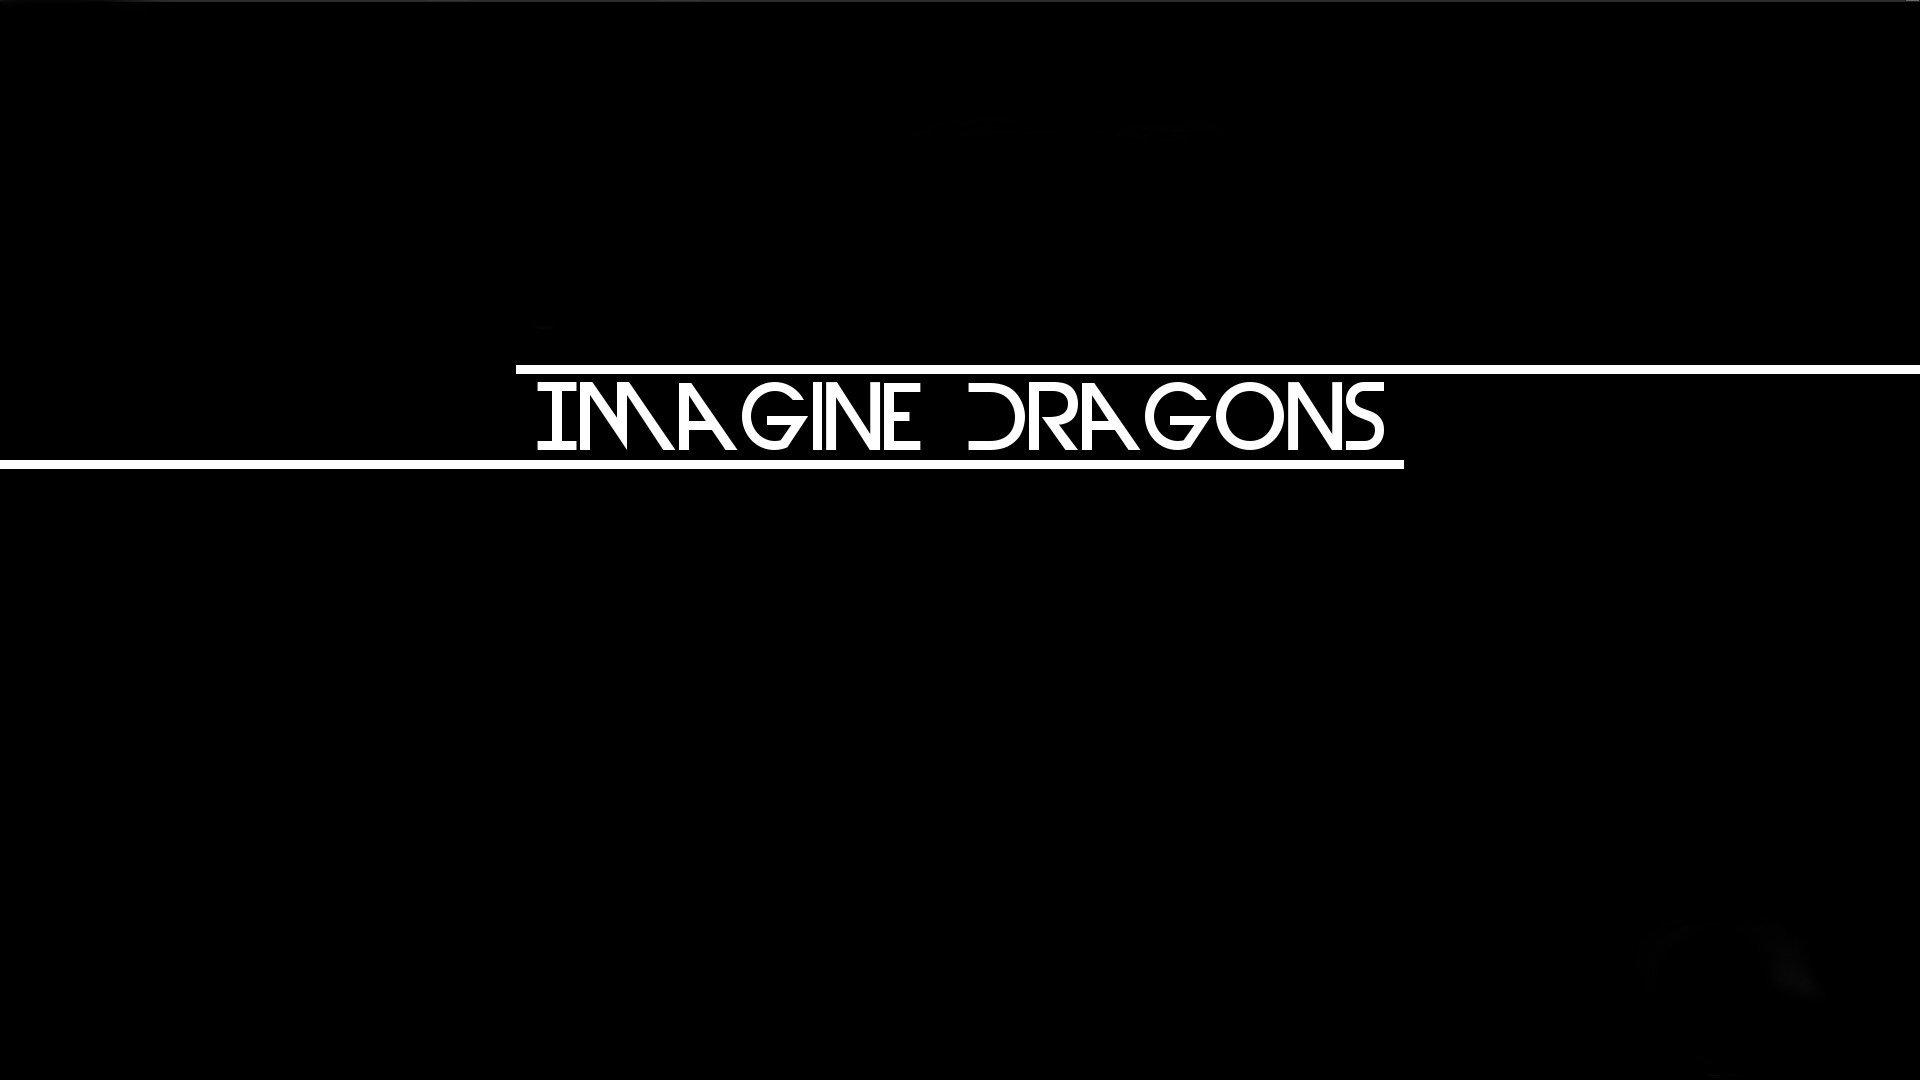 Imagine Dragons wallpaper 1920x1080 Full HD (1080p) desktop background